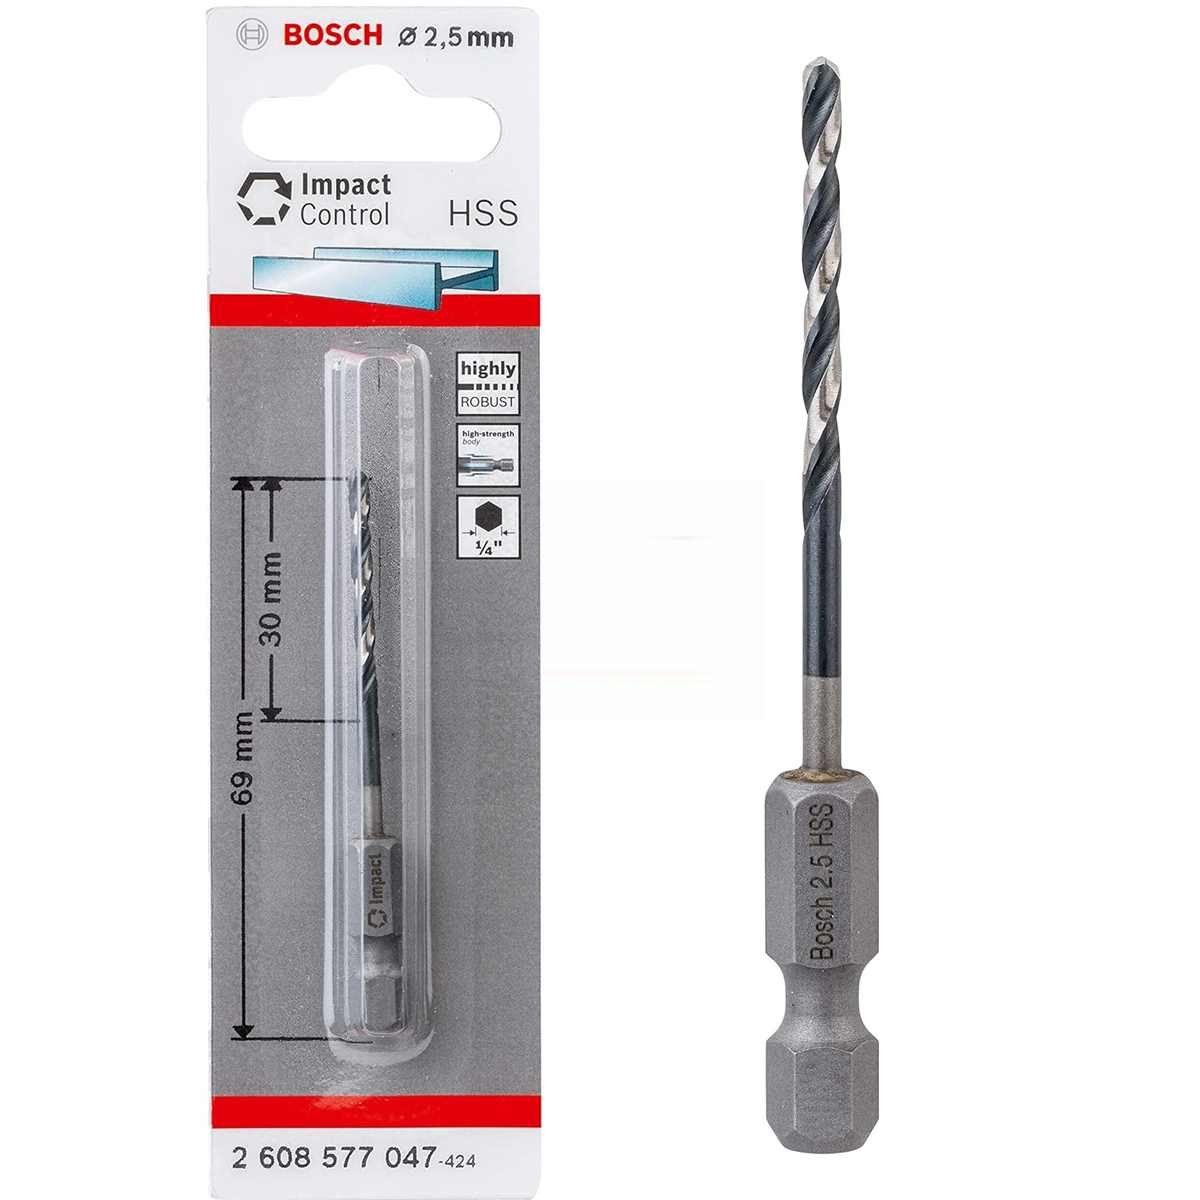 BOSCH Bohrer- und Bitset Bosch Professionel HSS Metall Bohrer 2,5 mm 1/4 Hex IMACT CONTROL